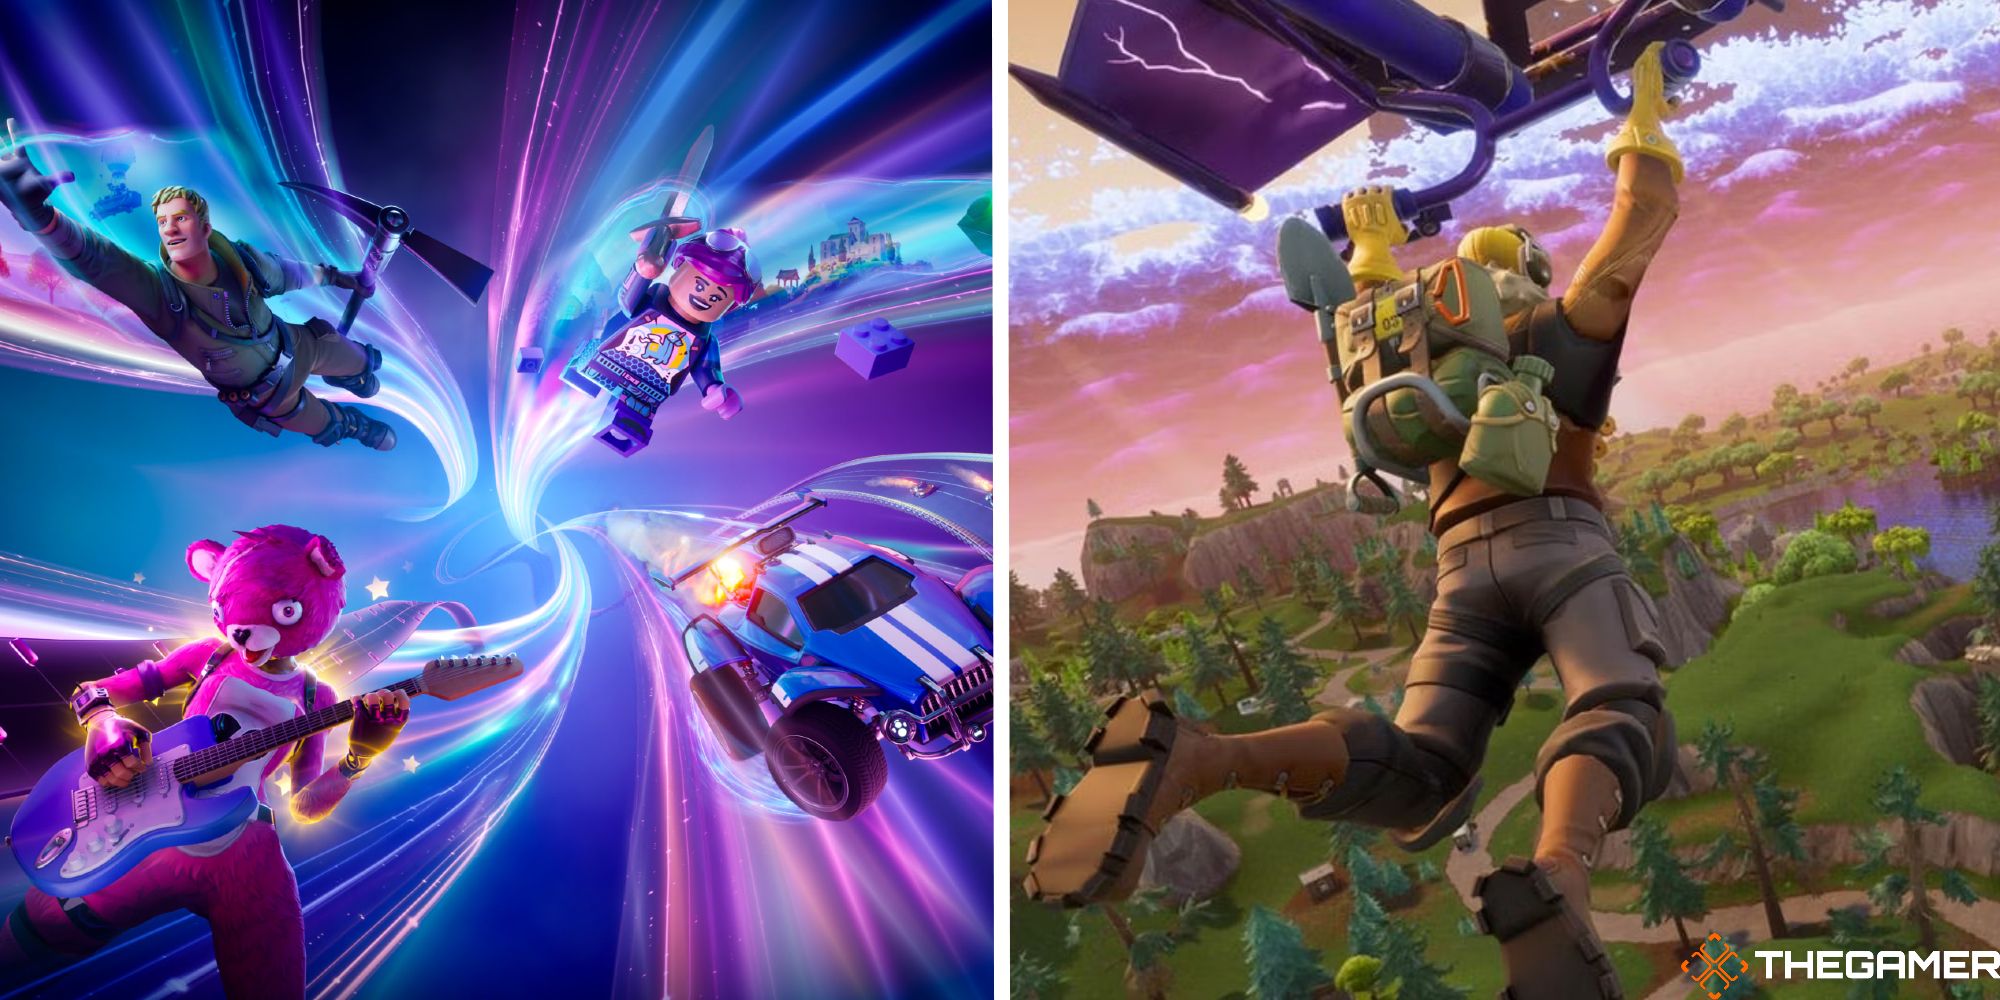 Split image showing Fortnite promotional image next to image of player gliding into battle royale island.